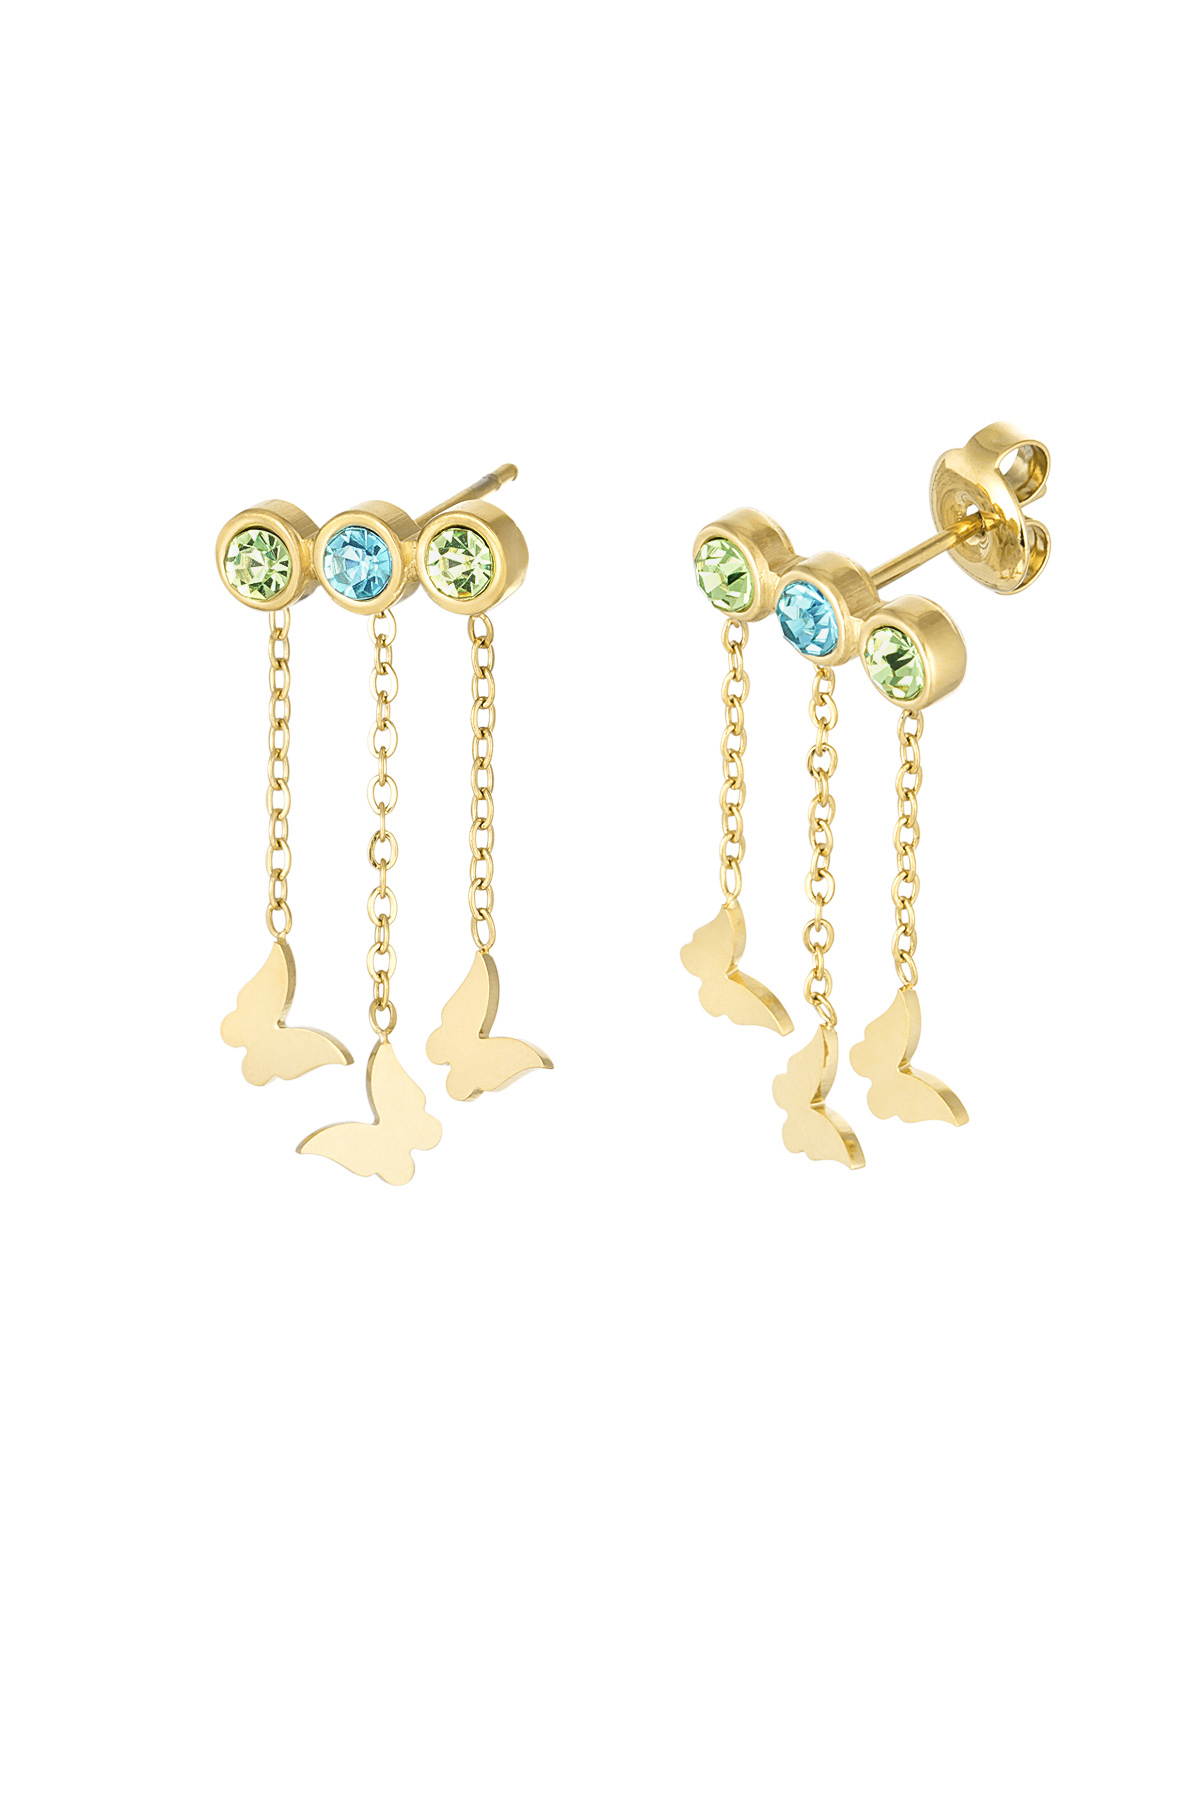 Earrings with butterflies & stones - gold/blue/green 